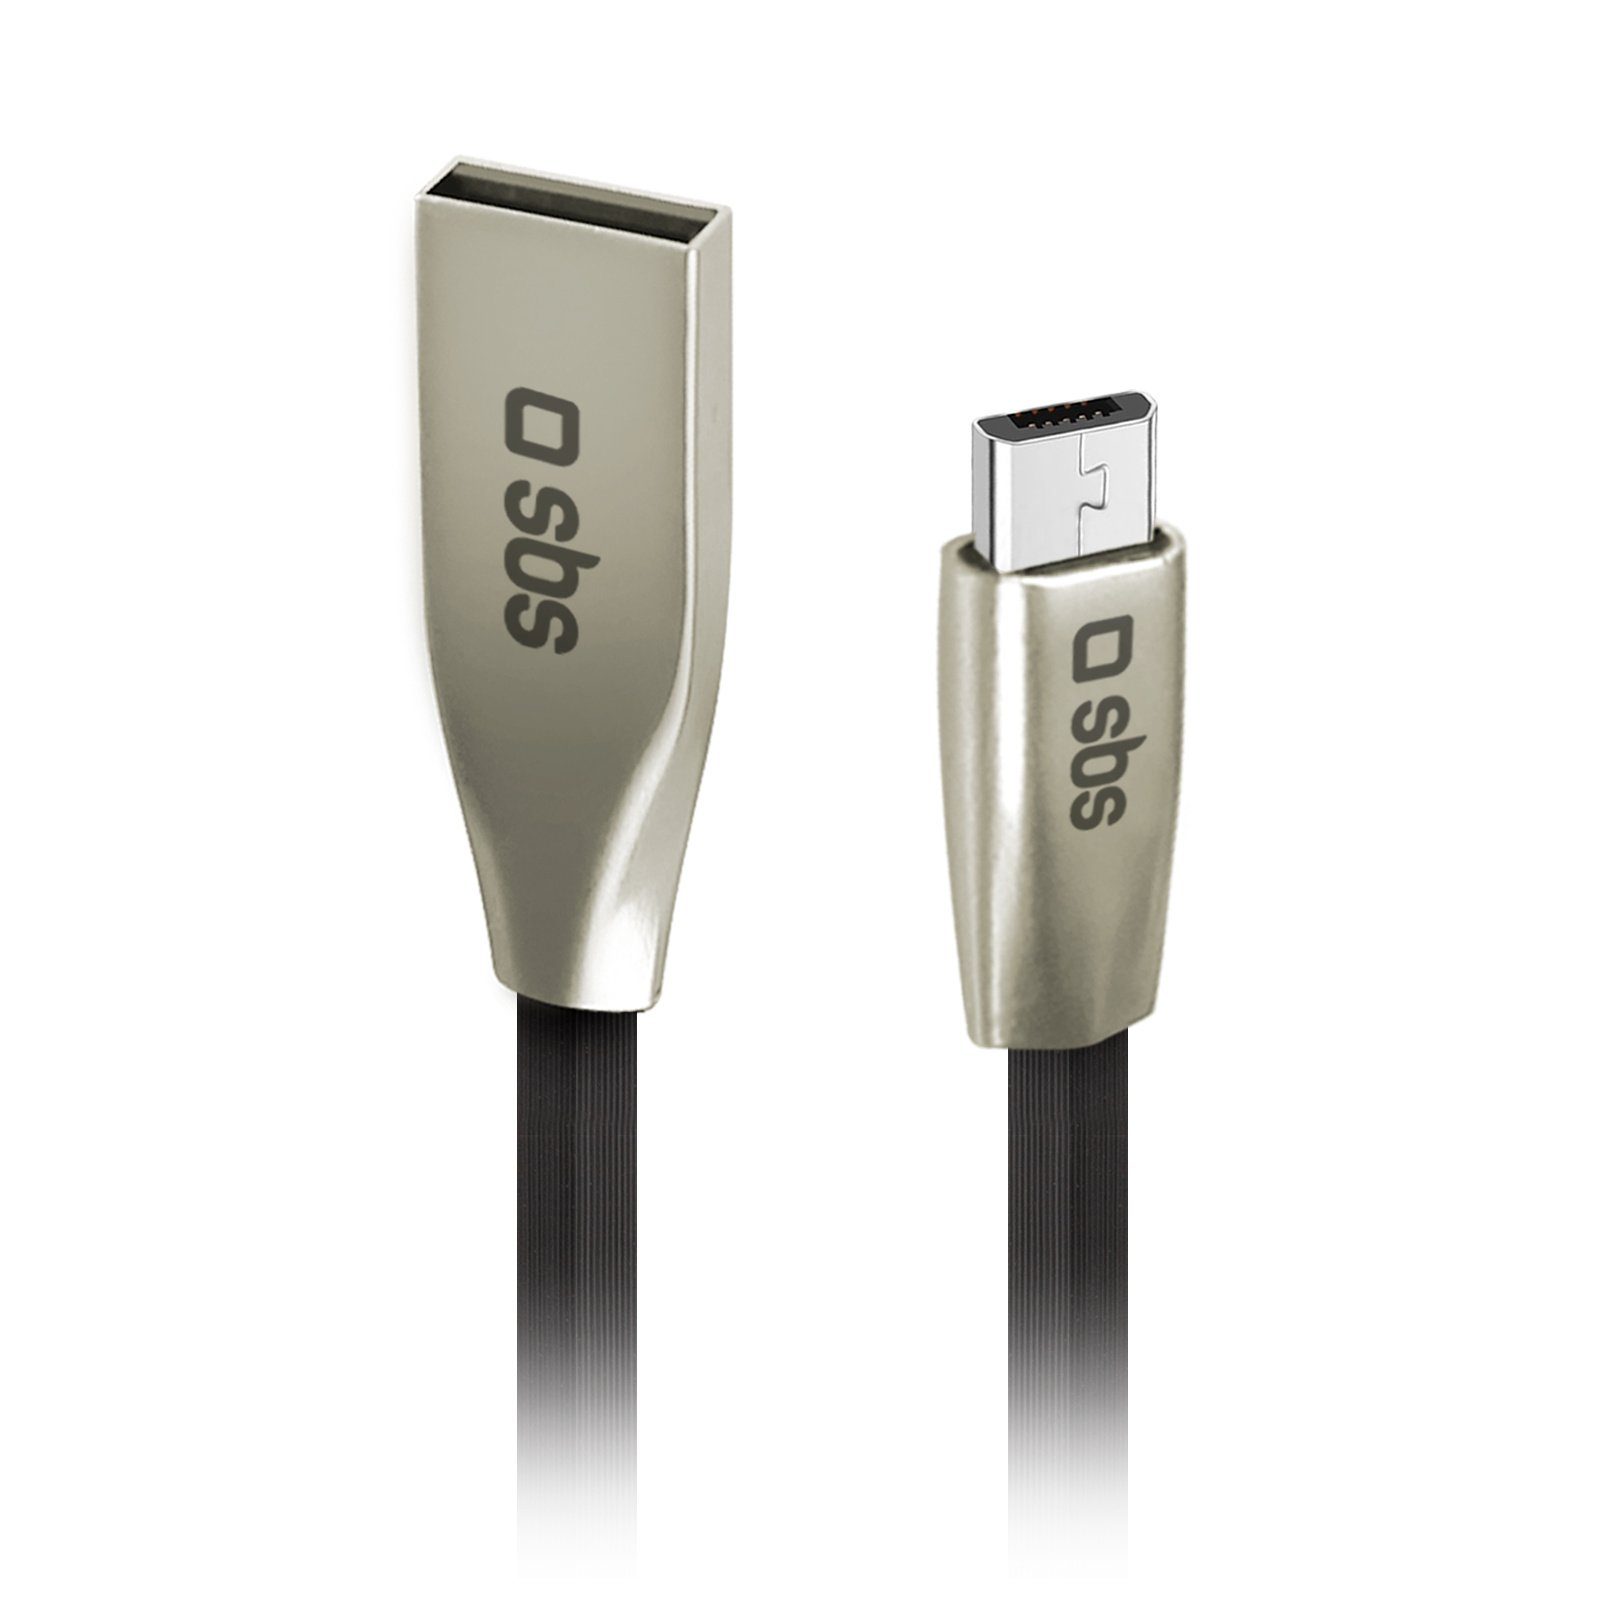 sbs »Handy Ladekabel & Datenkabel 150 cm - Handy Kabel mit USB 2.0 & Micro  USB Ausgang - Ideal für Handy Samsung Galaxy S10E, S10+, S10, S9, S8, S7,  S6, Note 10,